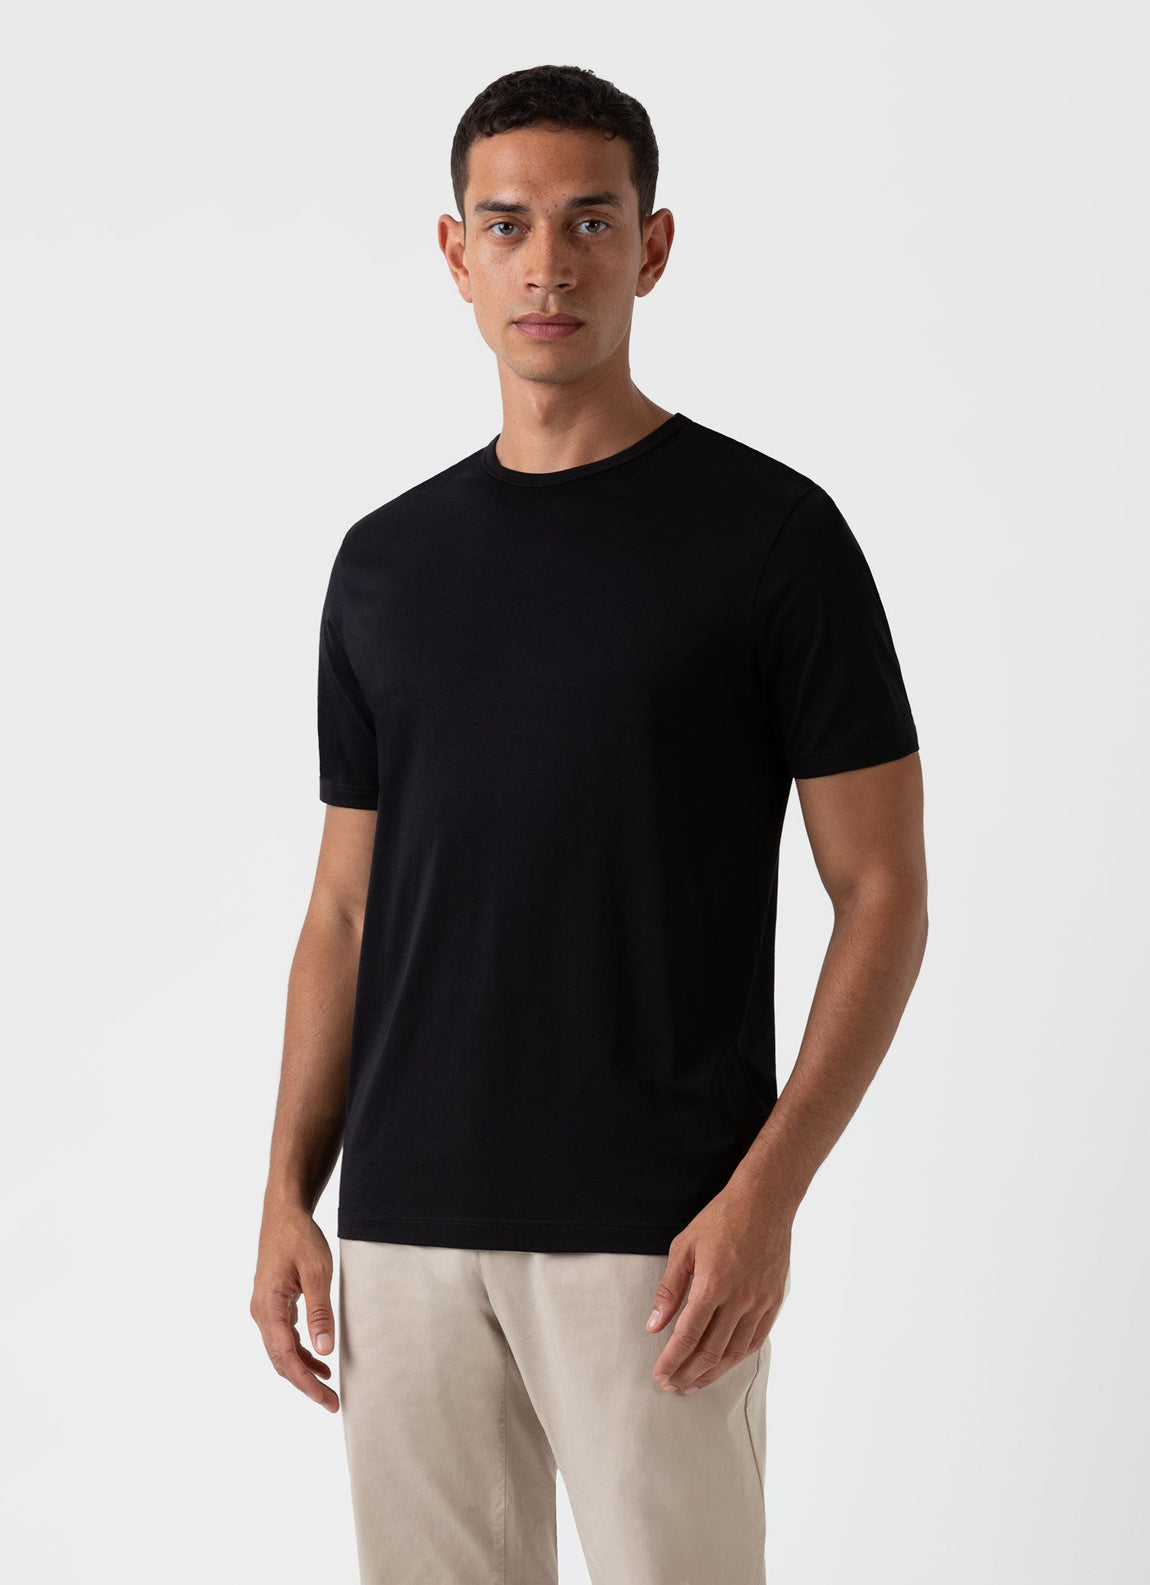 Men's Classic T-shirt in Black, t-shirt 